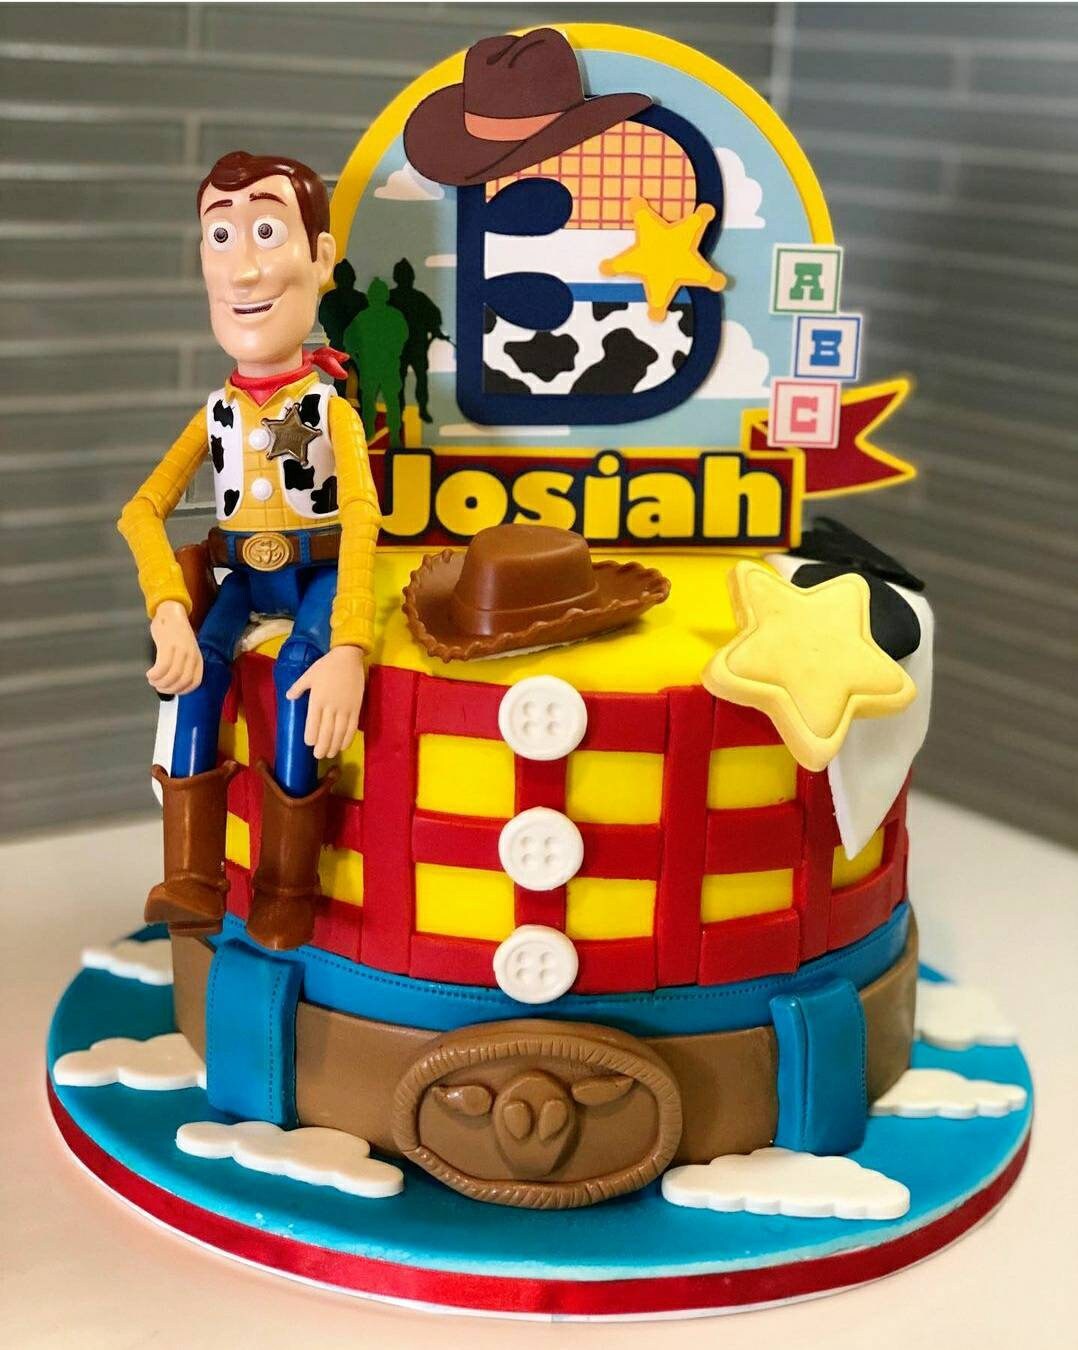 Disney/Pixar Toy Story Edible Cake Topper Image - Walmart.com